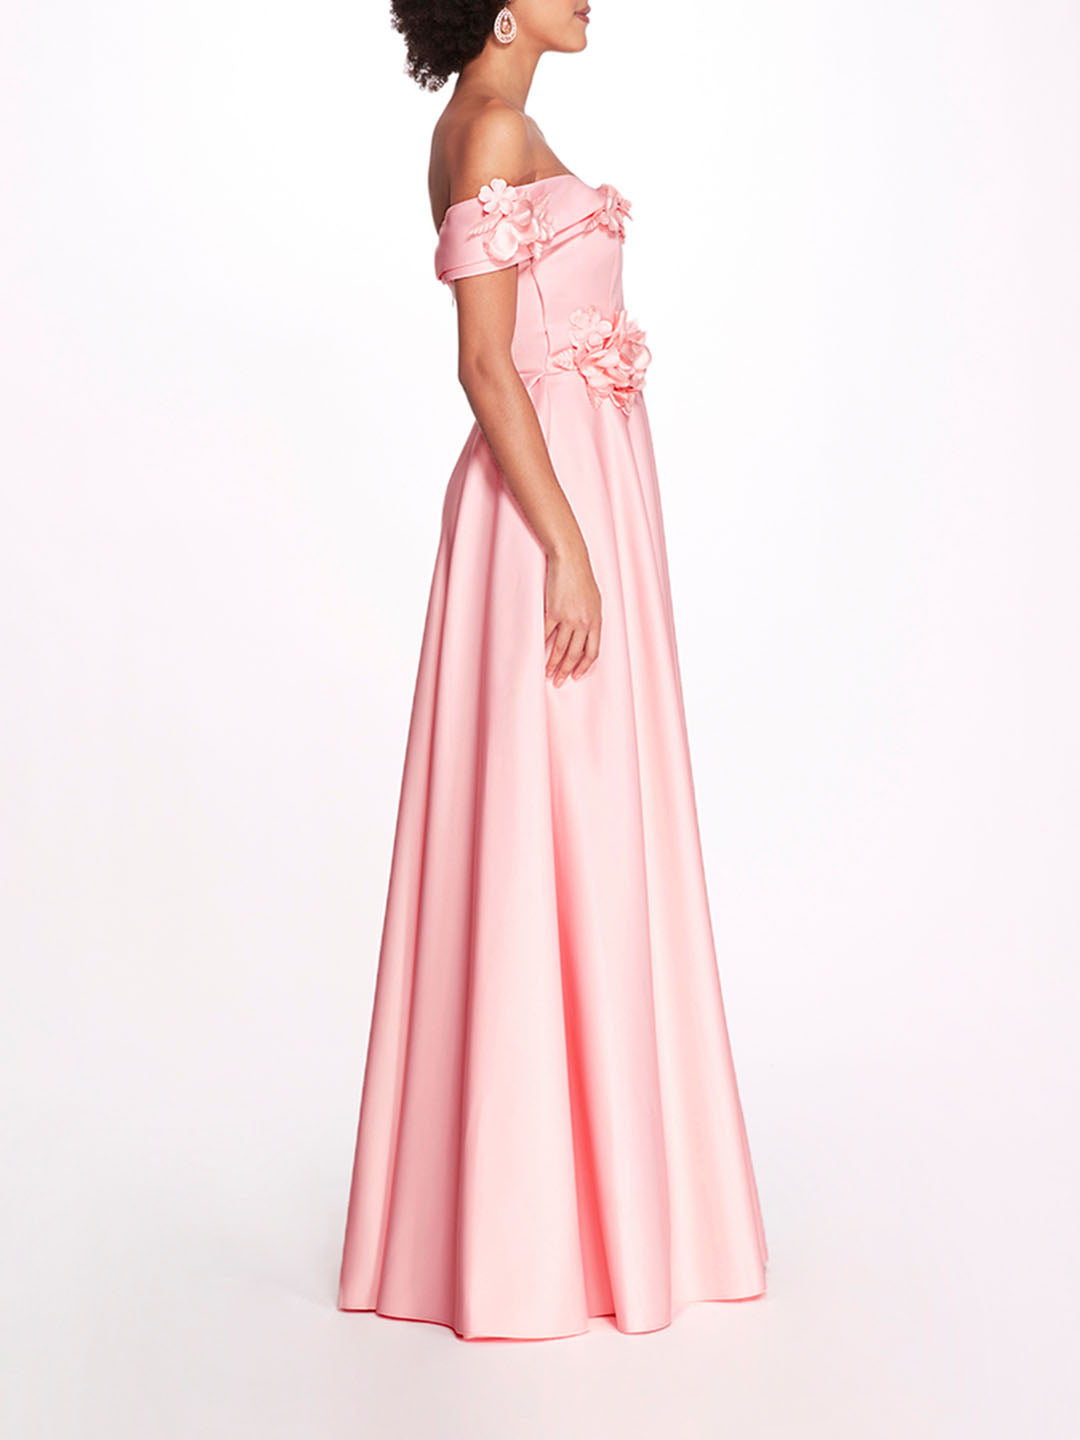 Duchess Satin Ball Gown | Marchesa